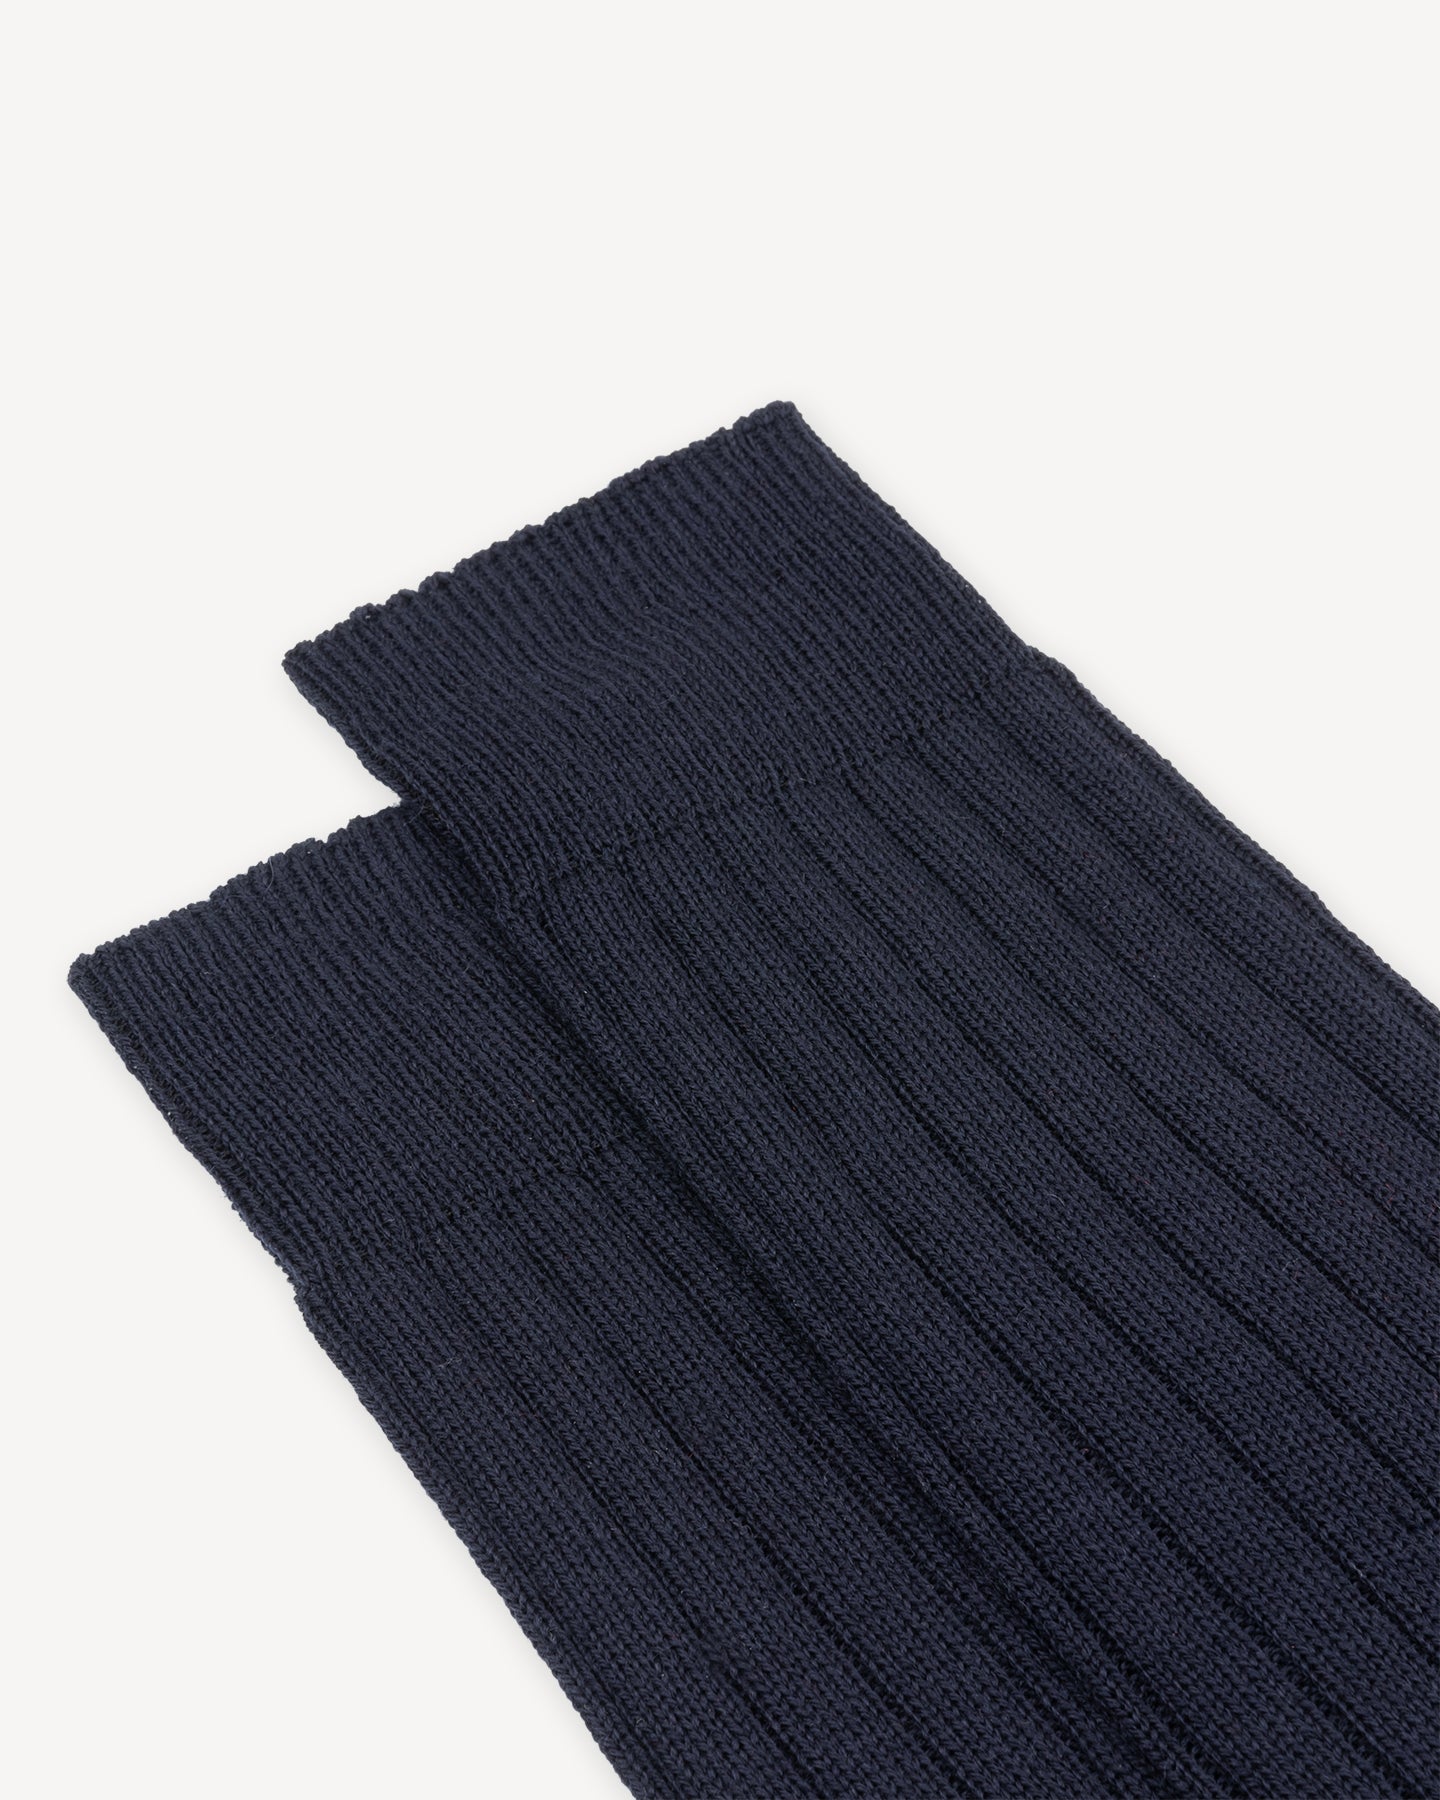 Navy wide rib socks made from Australian merino wool